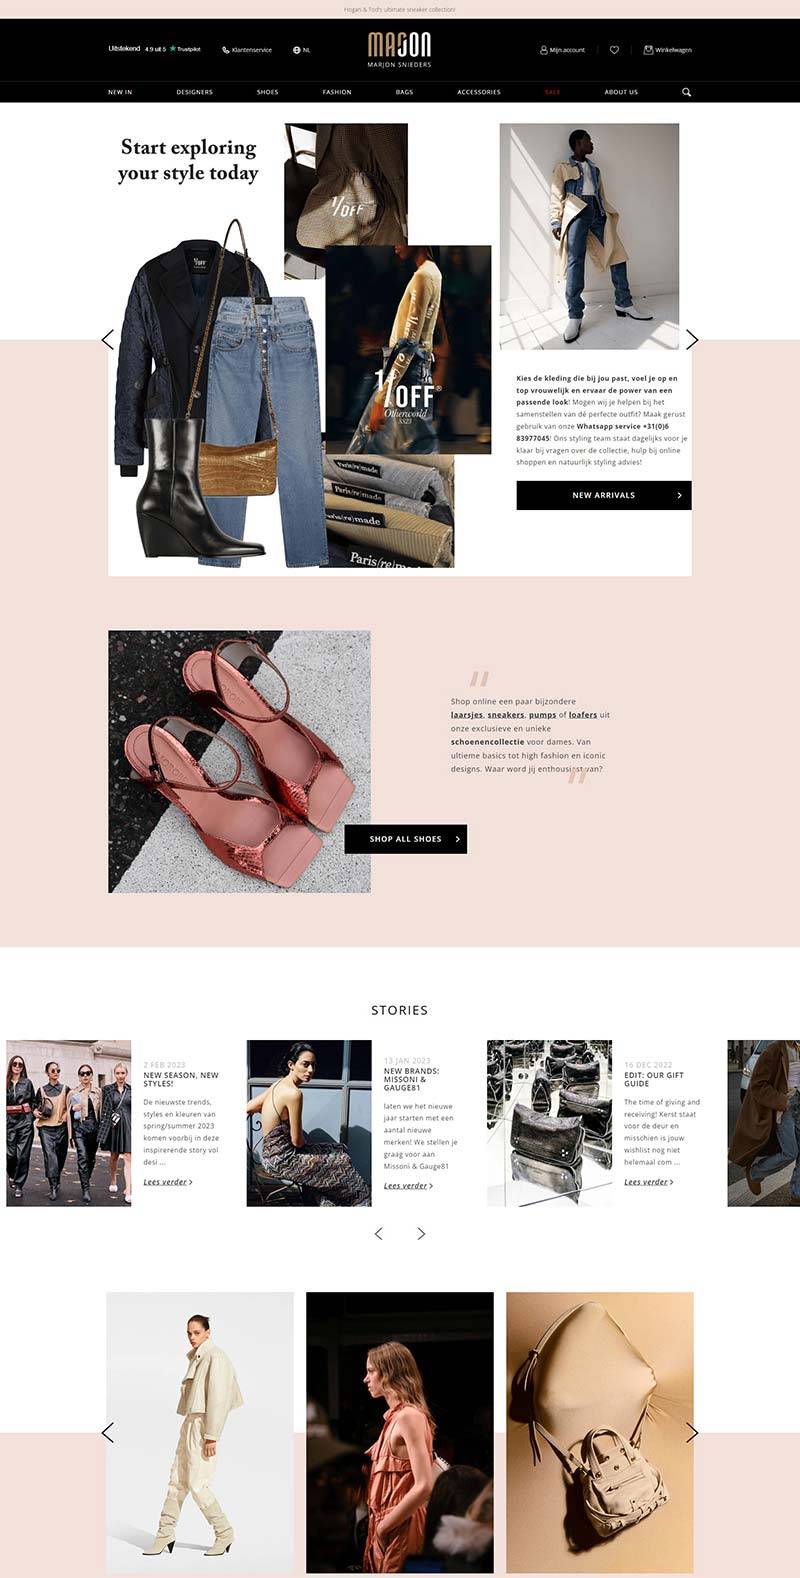 Marjon Snieders 荷兰高级时装品牌购物网站